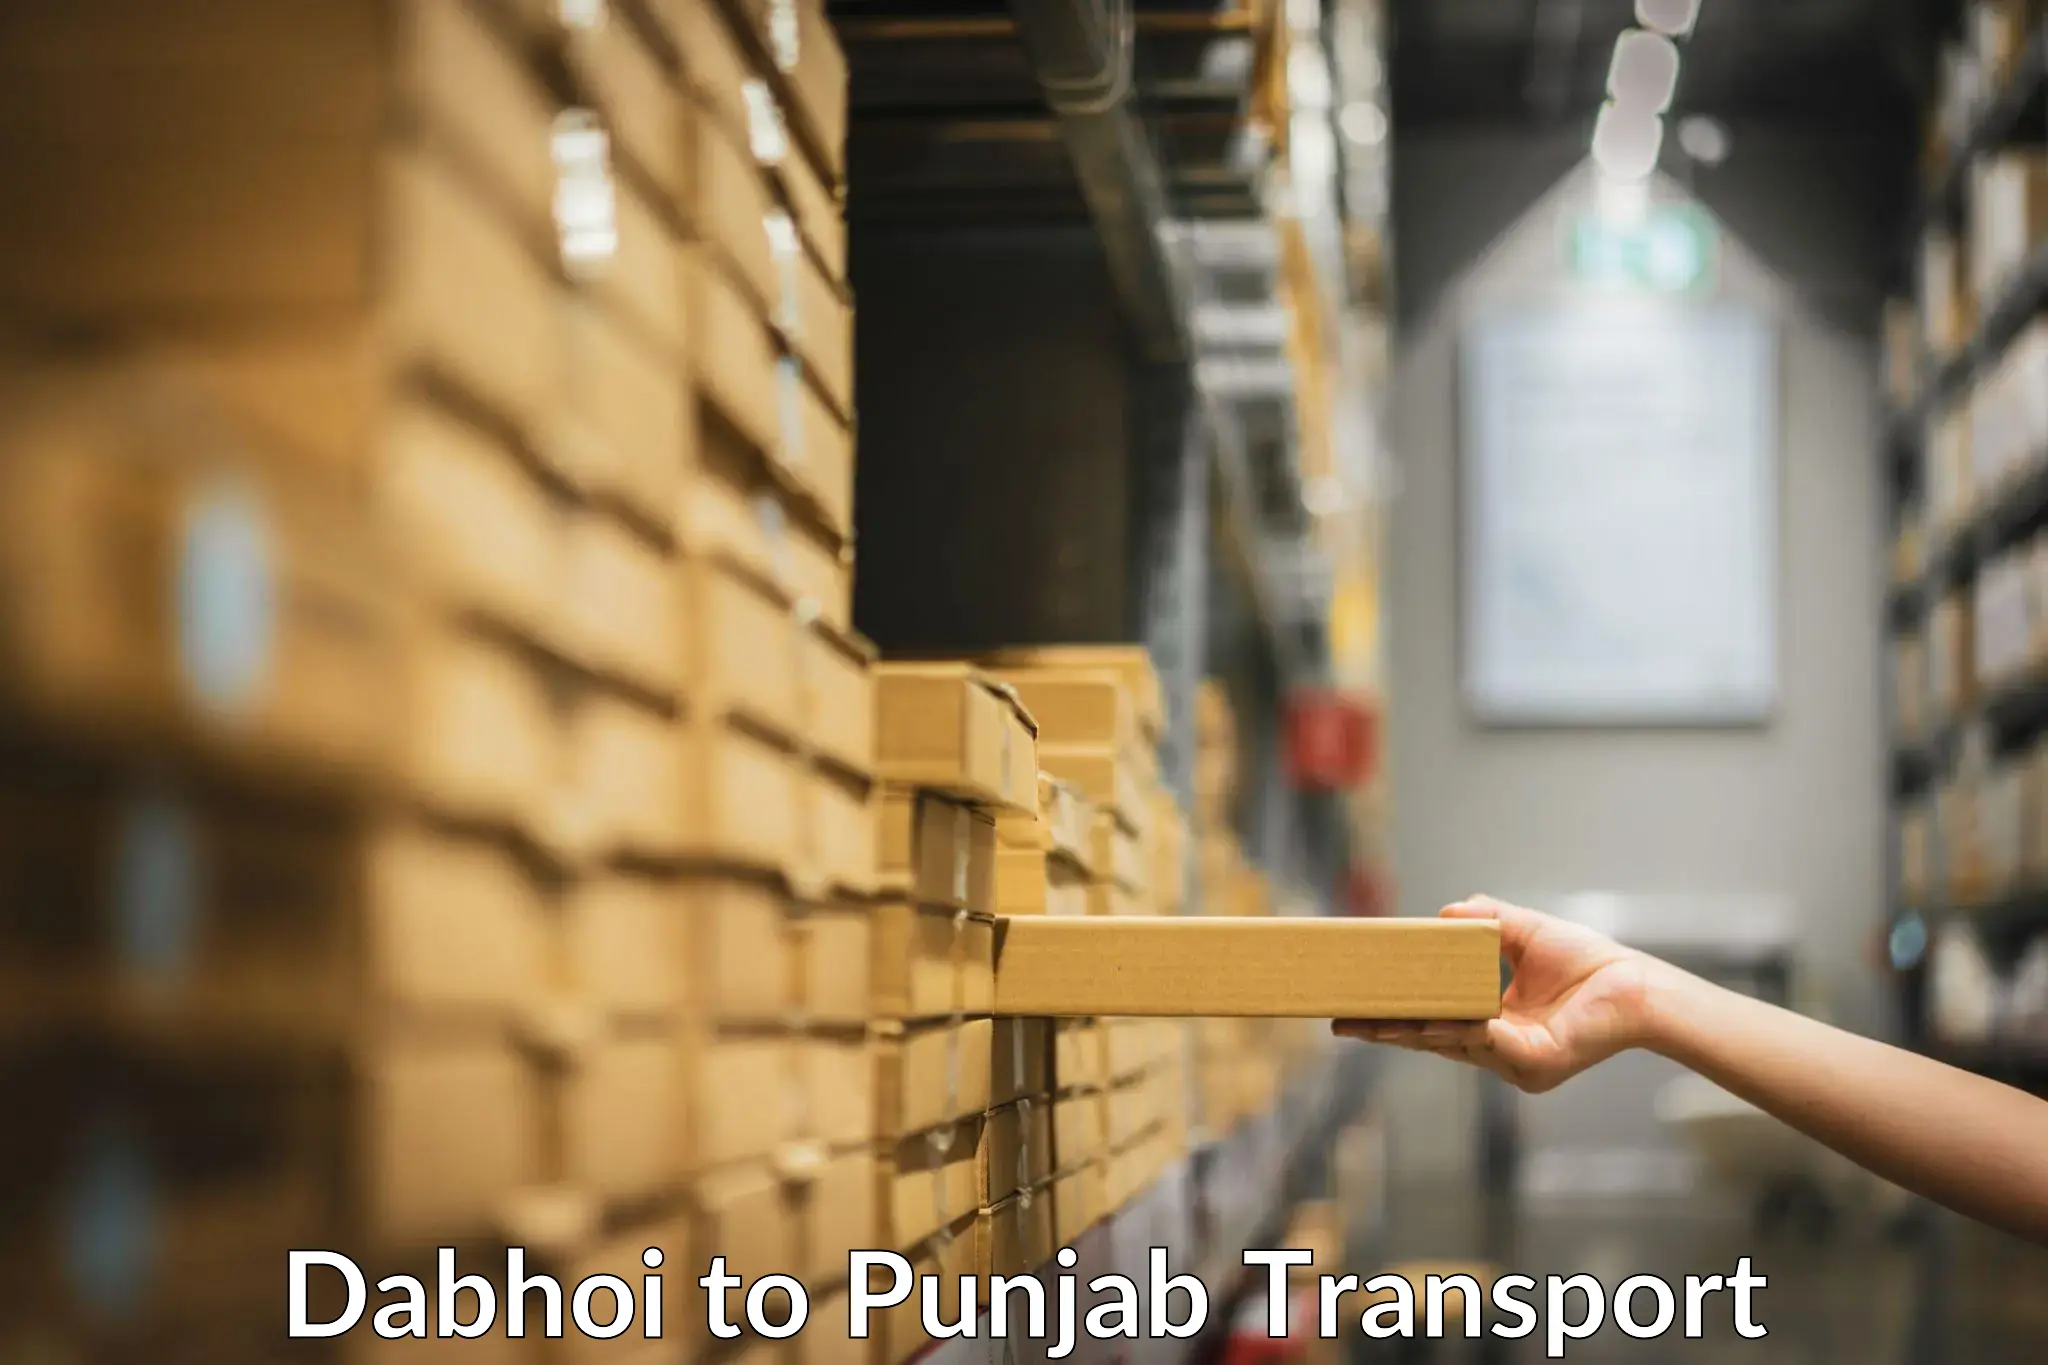 Furniture transport service in Dabhoi to Gurdaspur